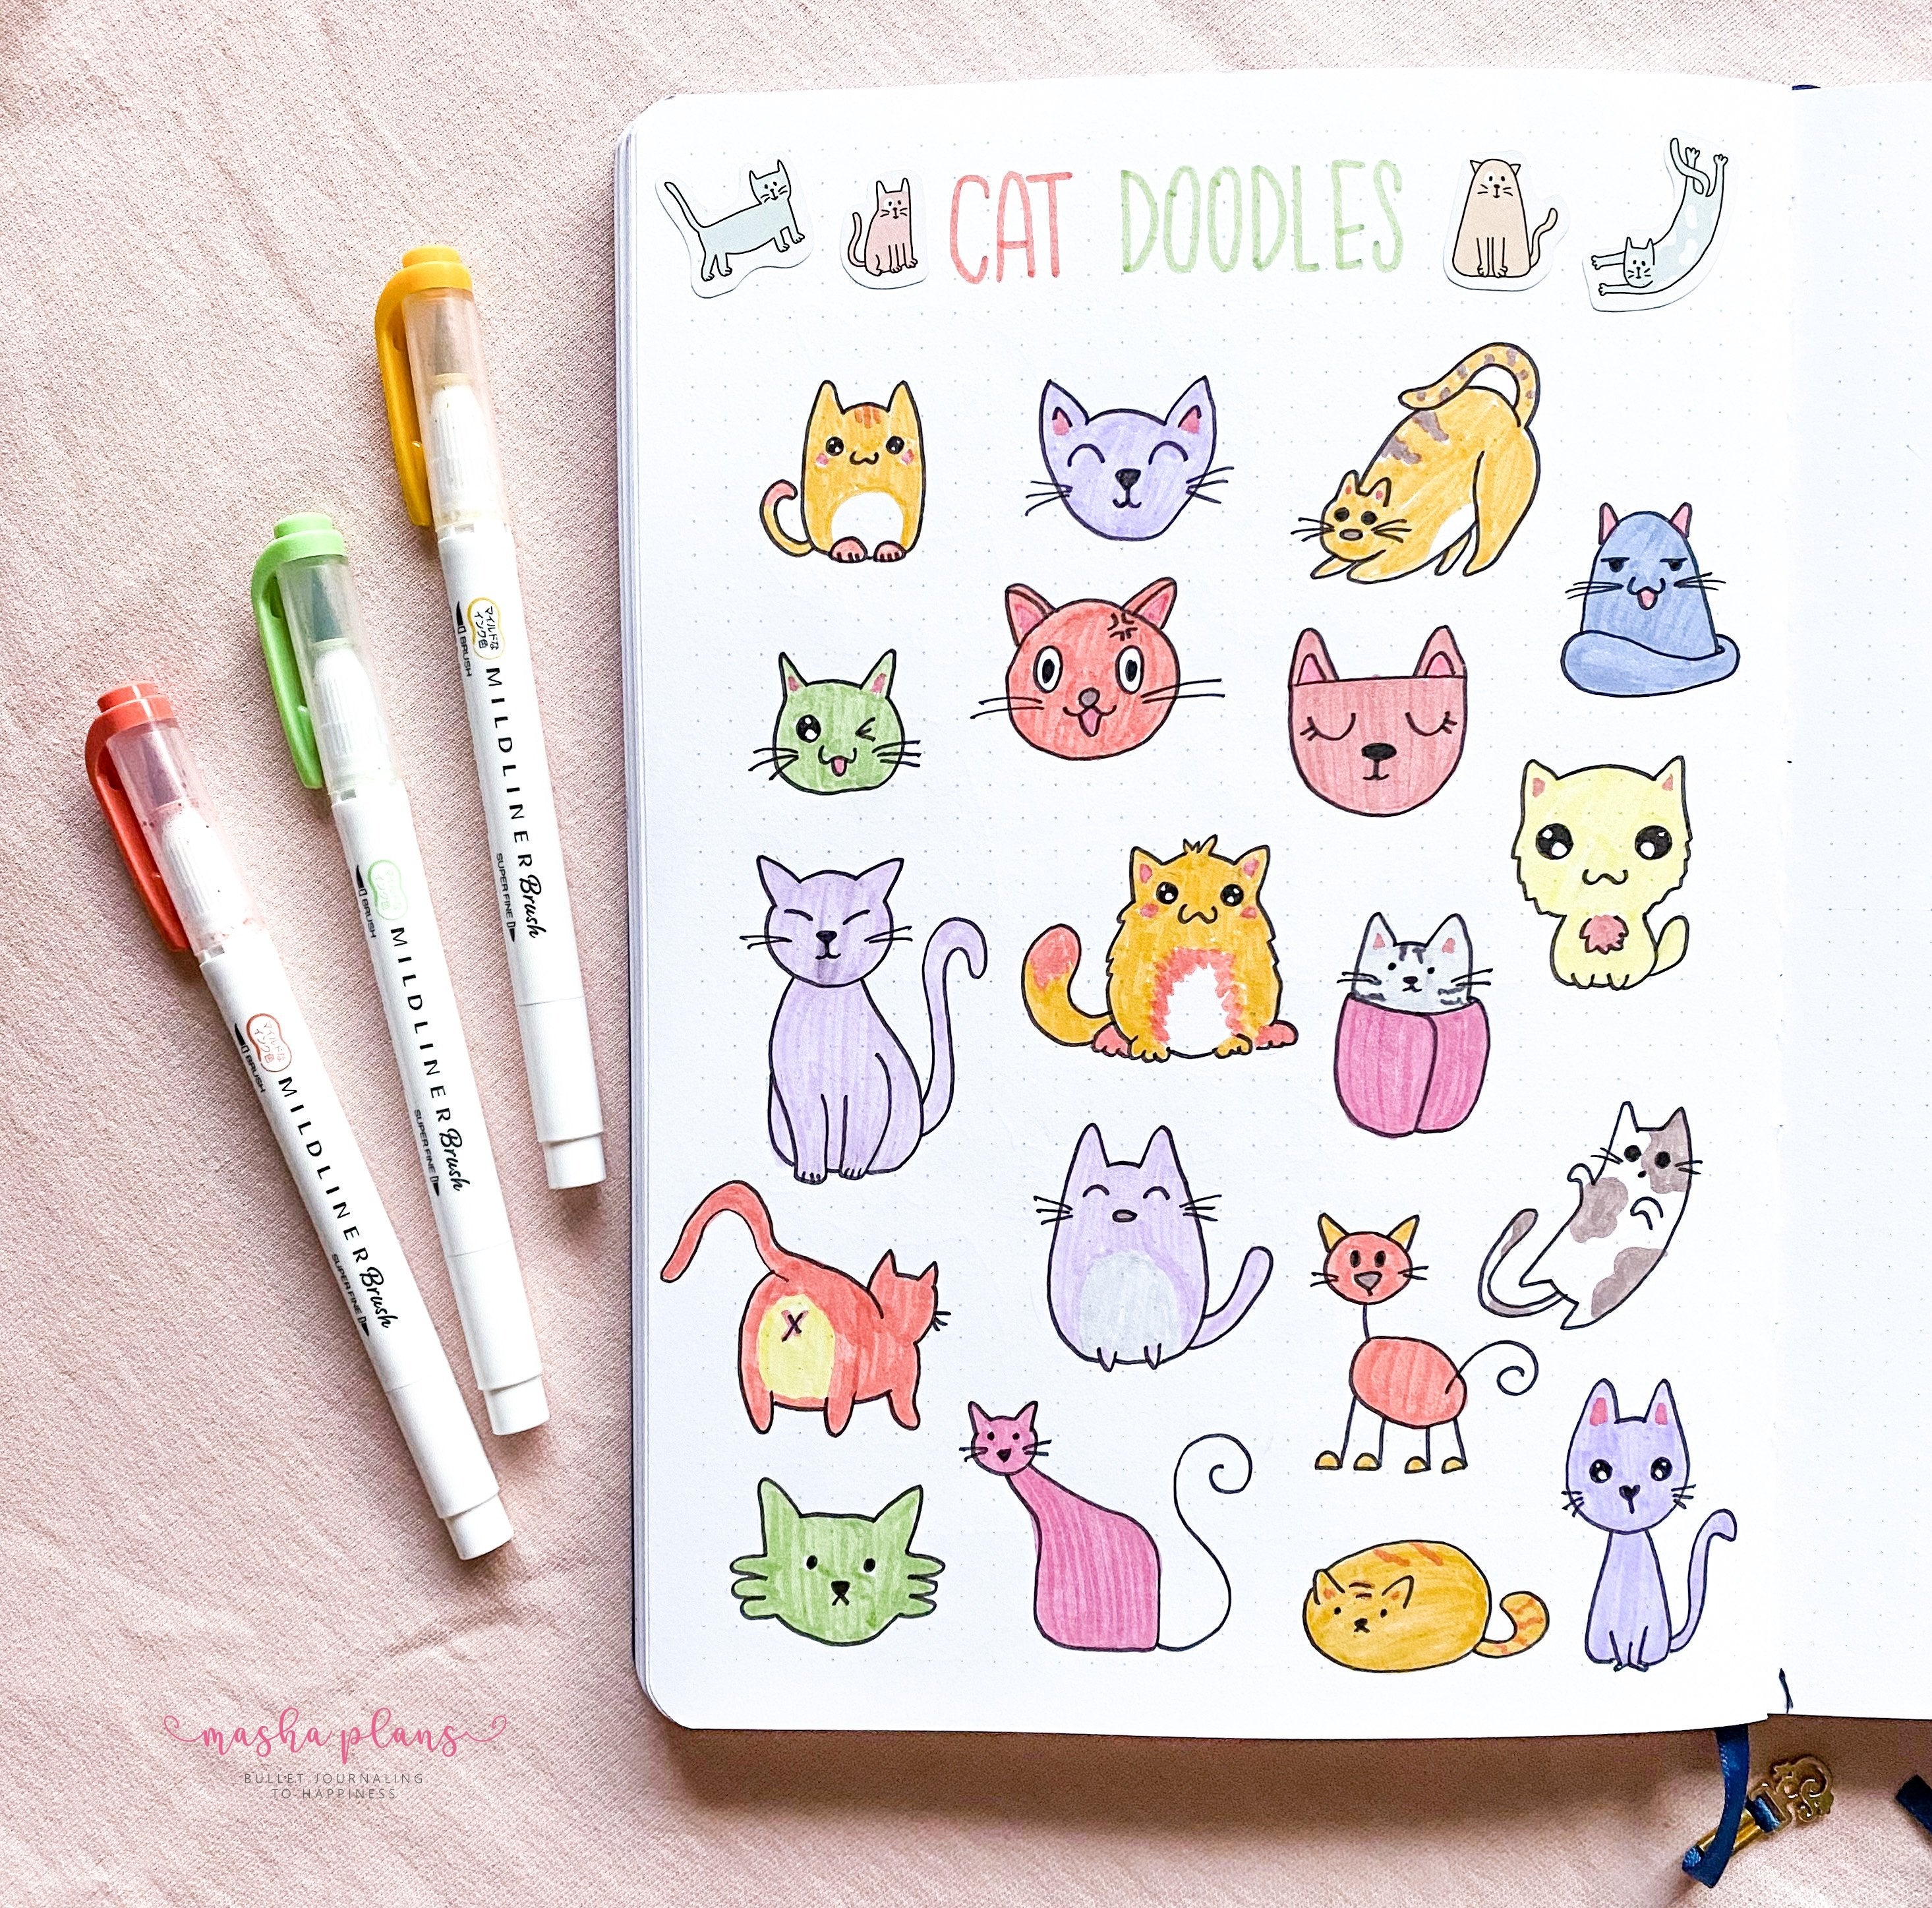 cat doodles inspiration